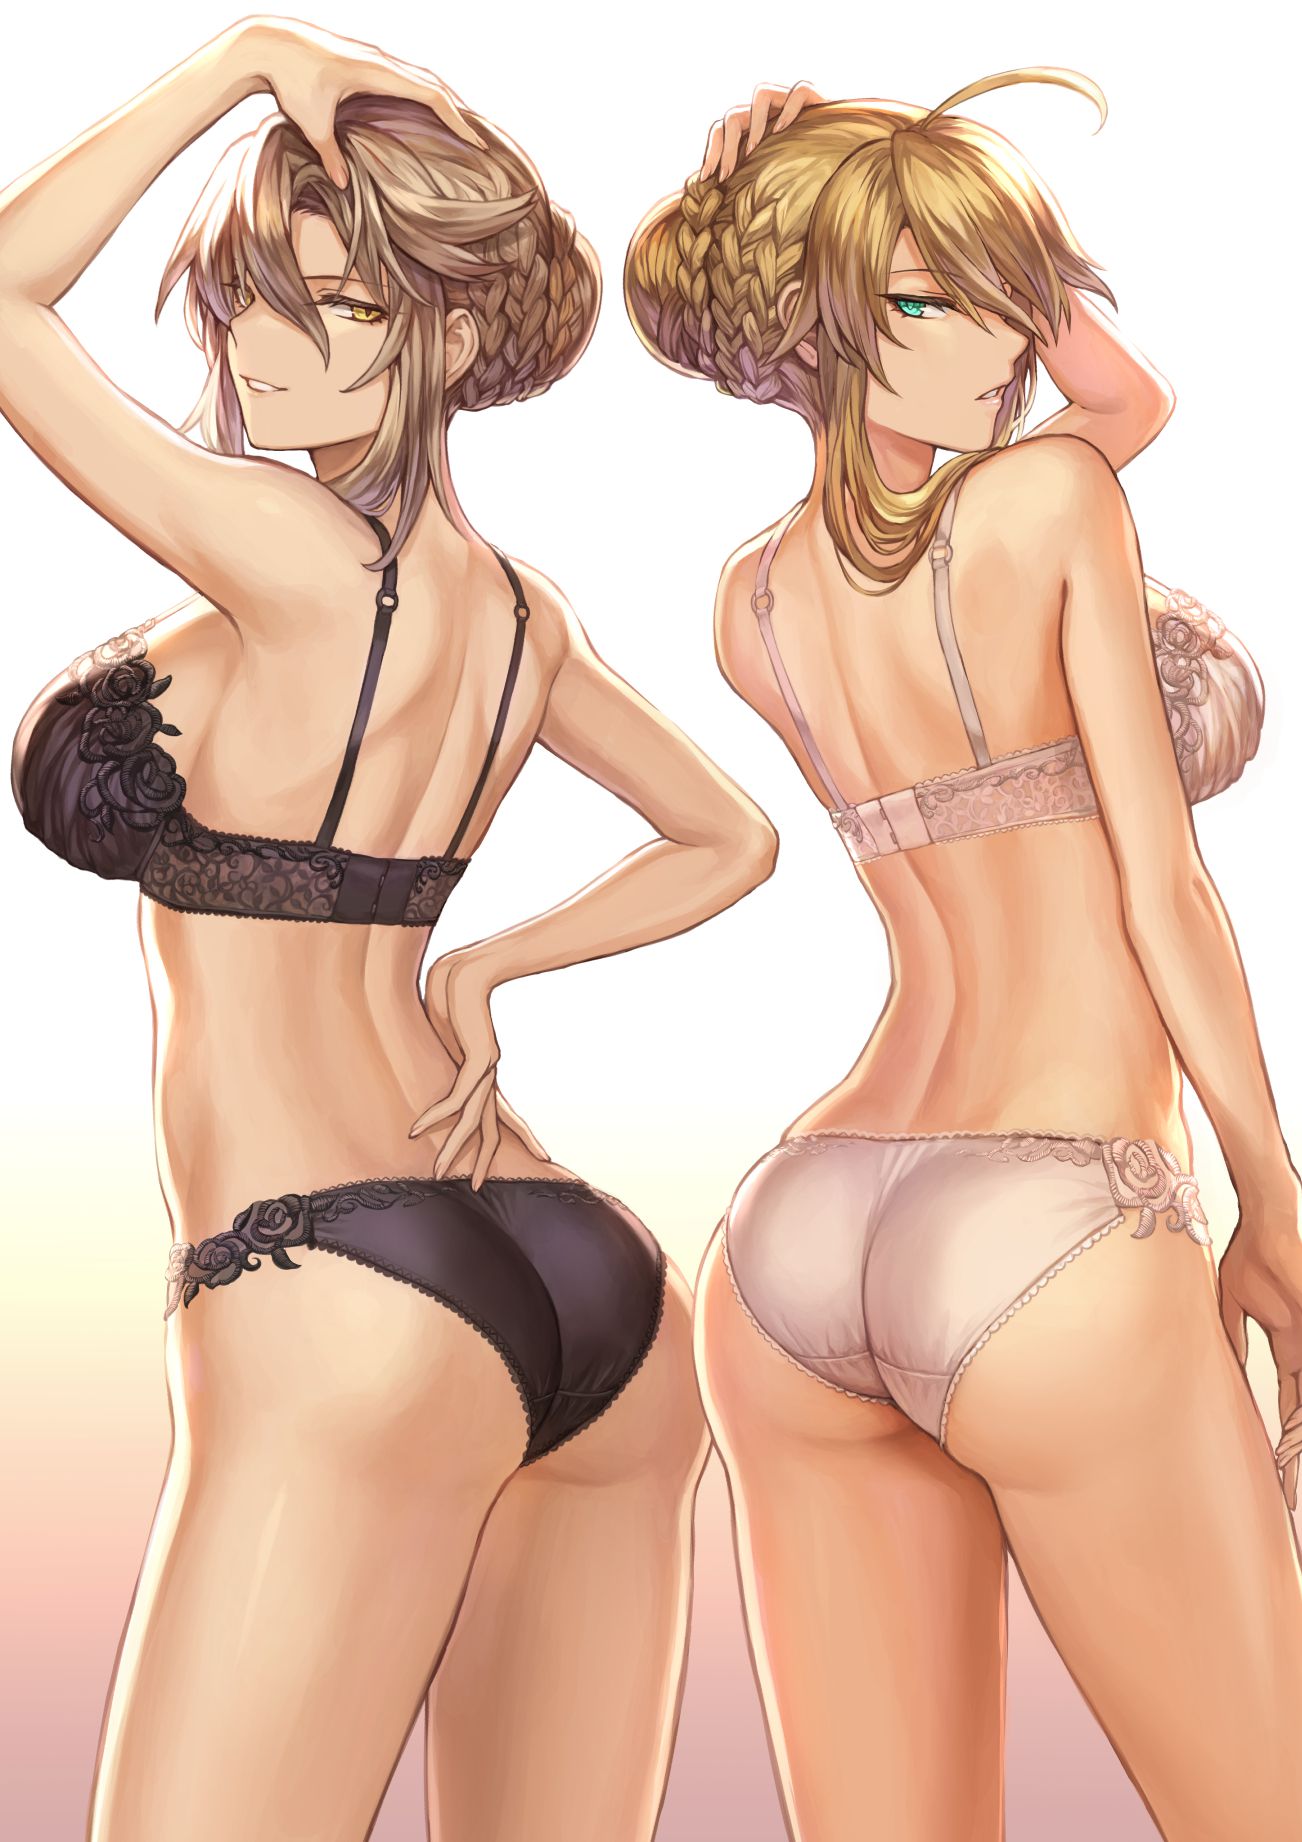 Erotic anime summary Erotic images of beautiful girls wearing lace underwear [50 photos] 31